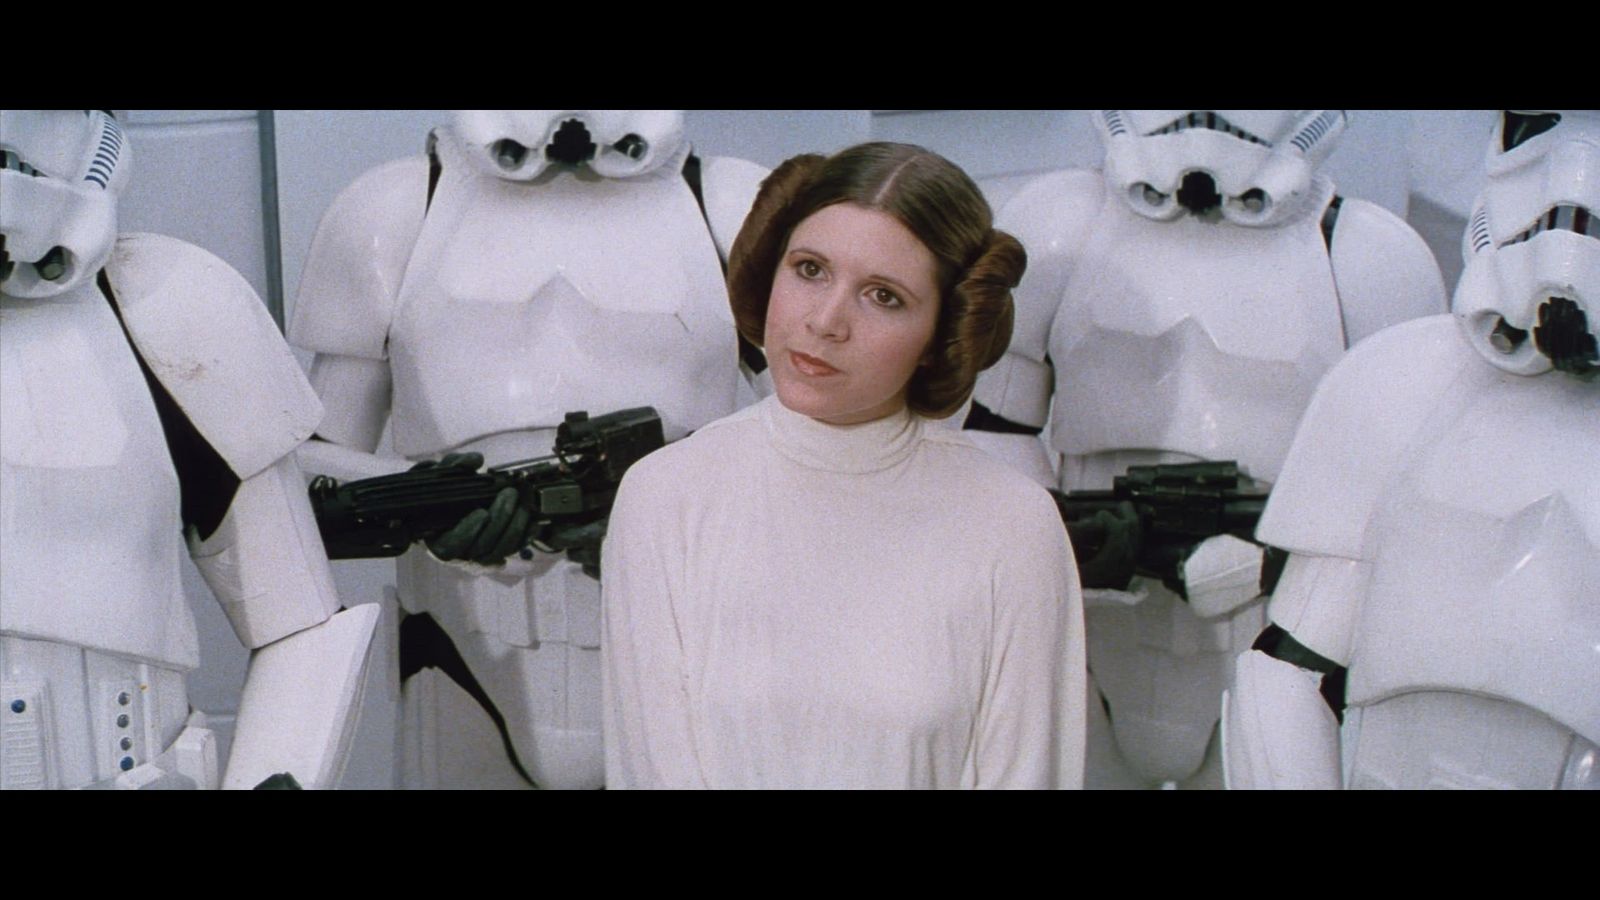 Princess Leia in A New Hope